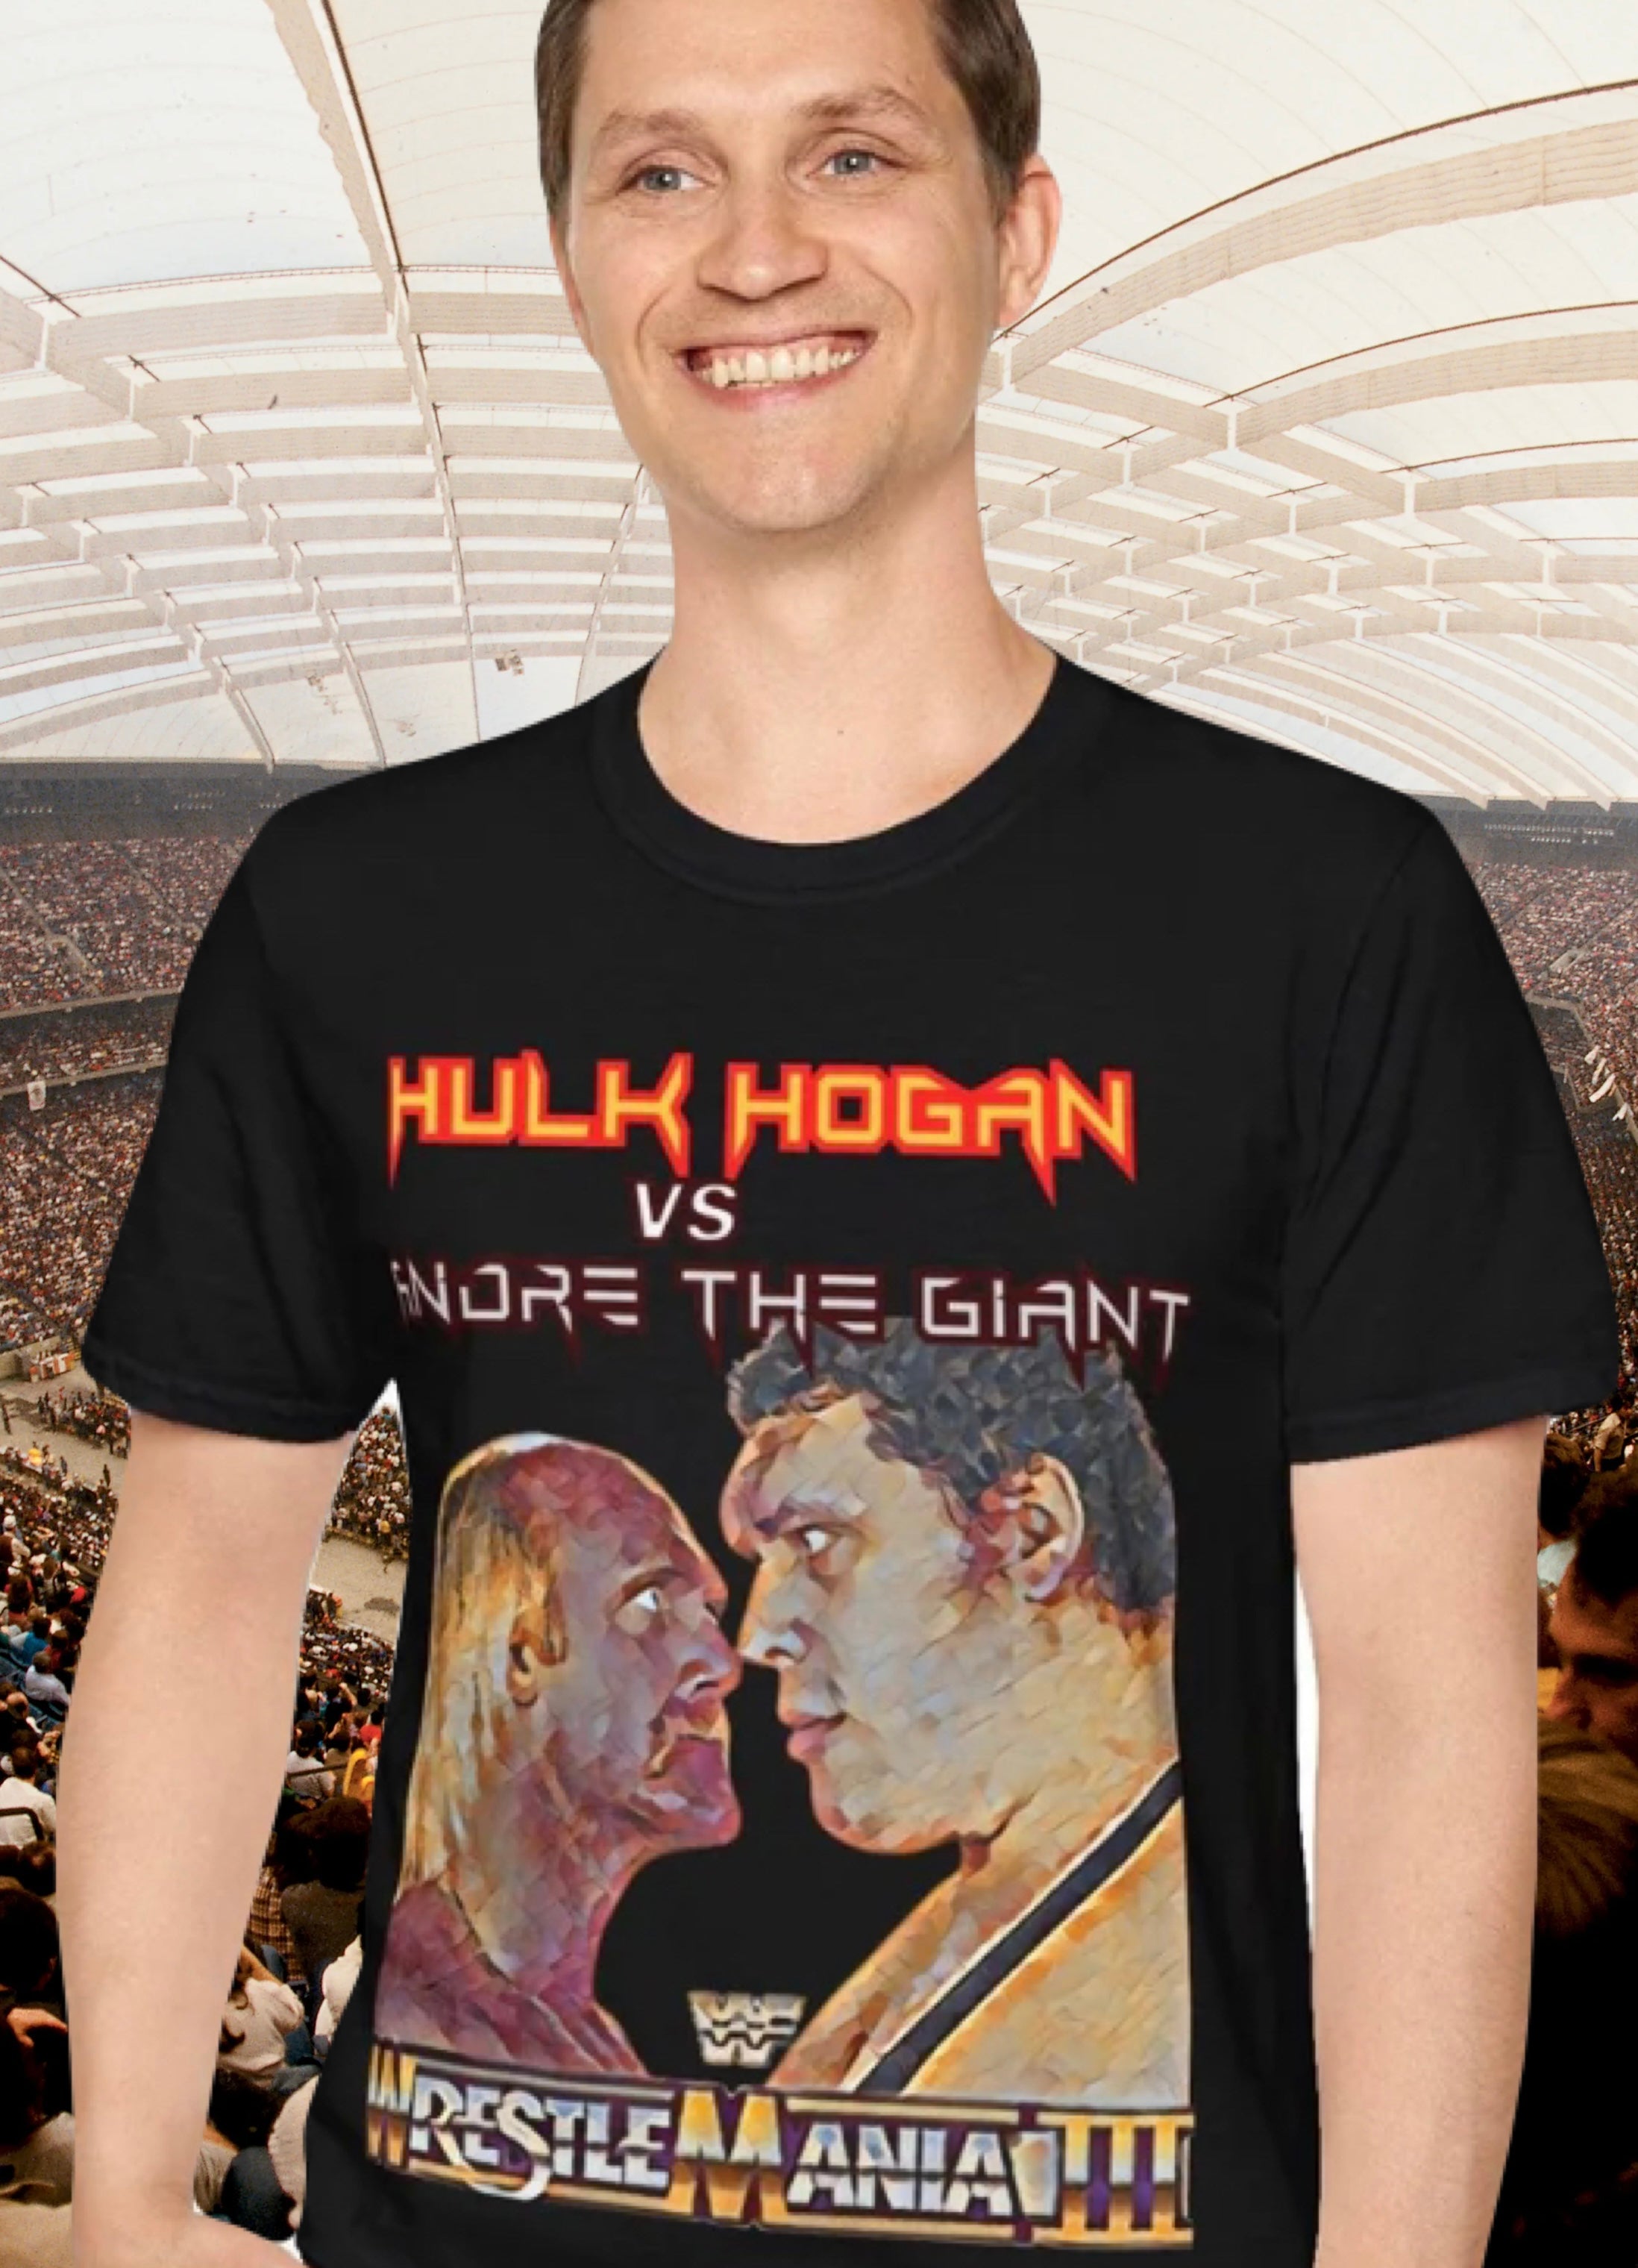 Hulk Hogan VS Andre The Giant Wrestlemania III